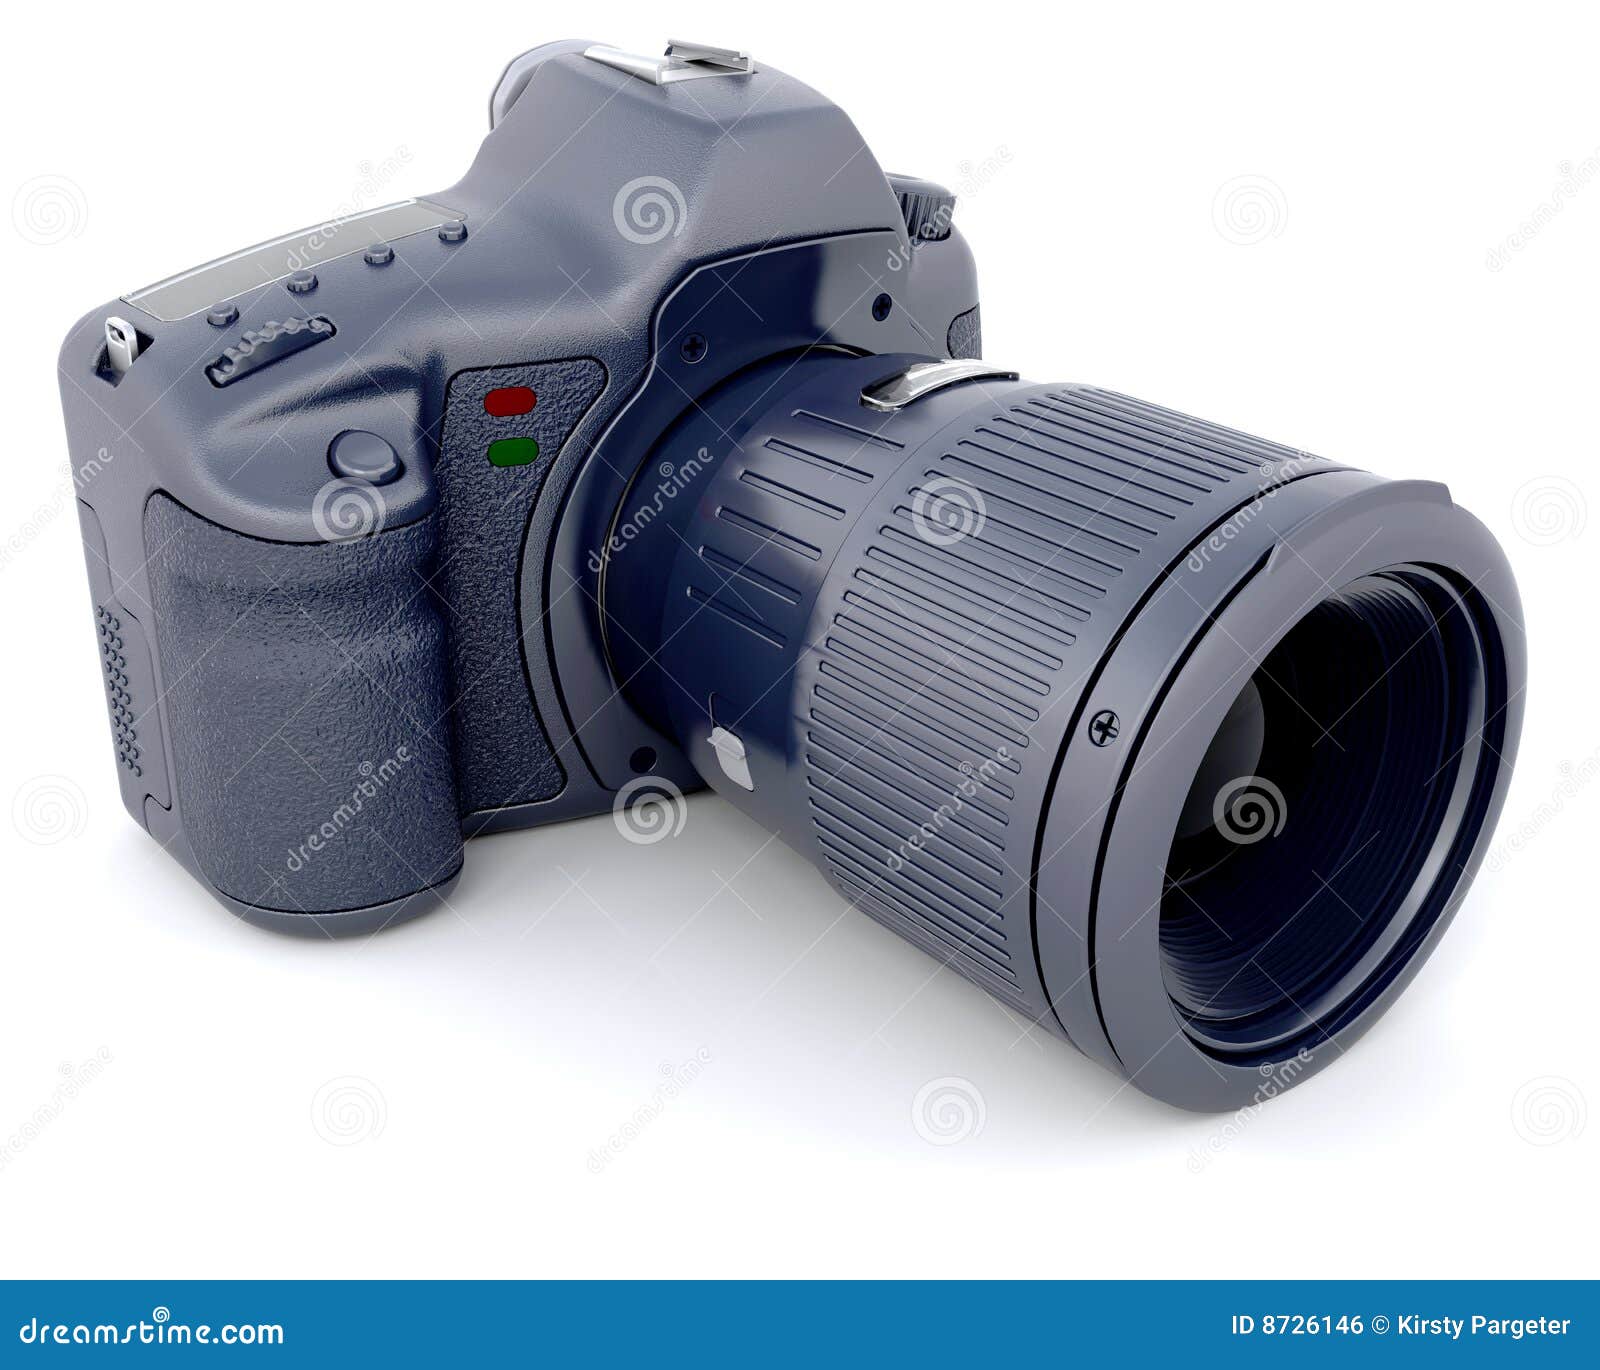 digital slr camera with telephoto zoom lense